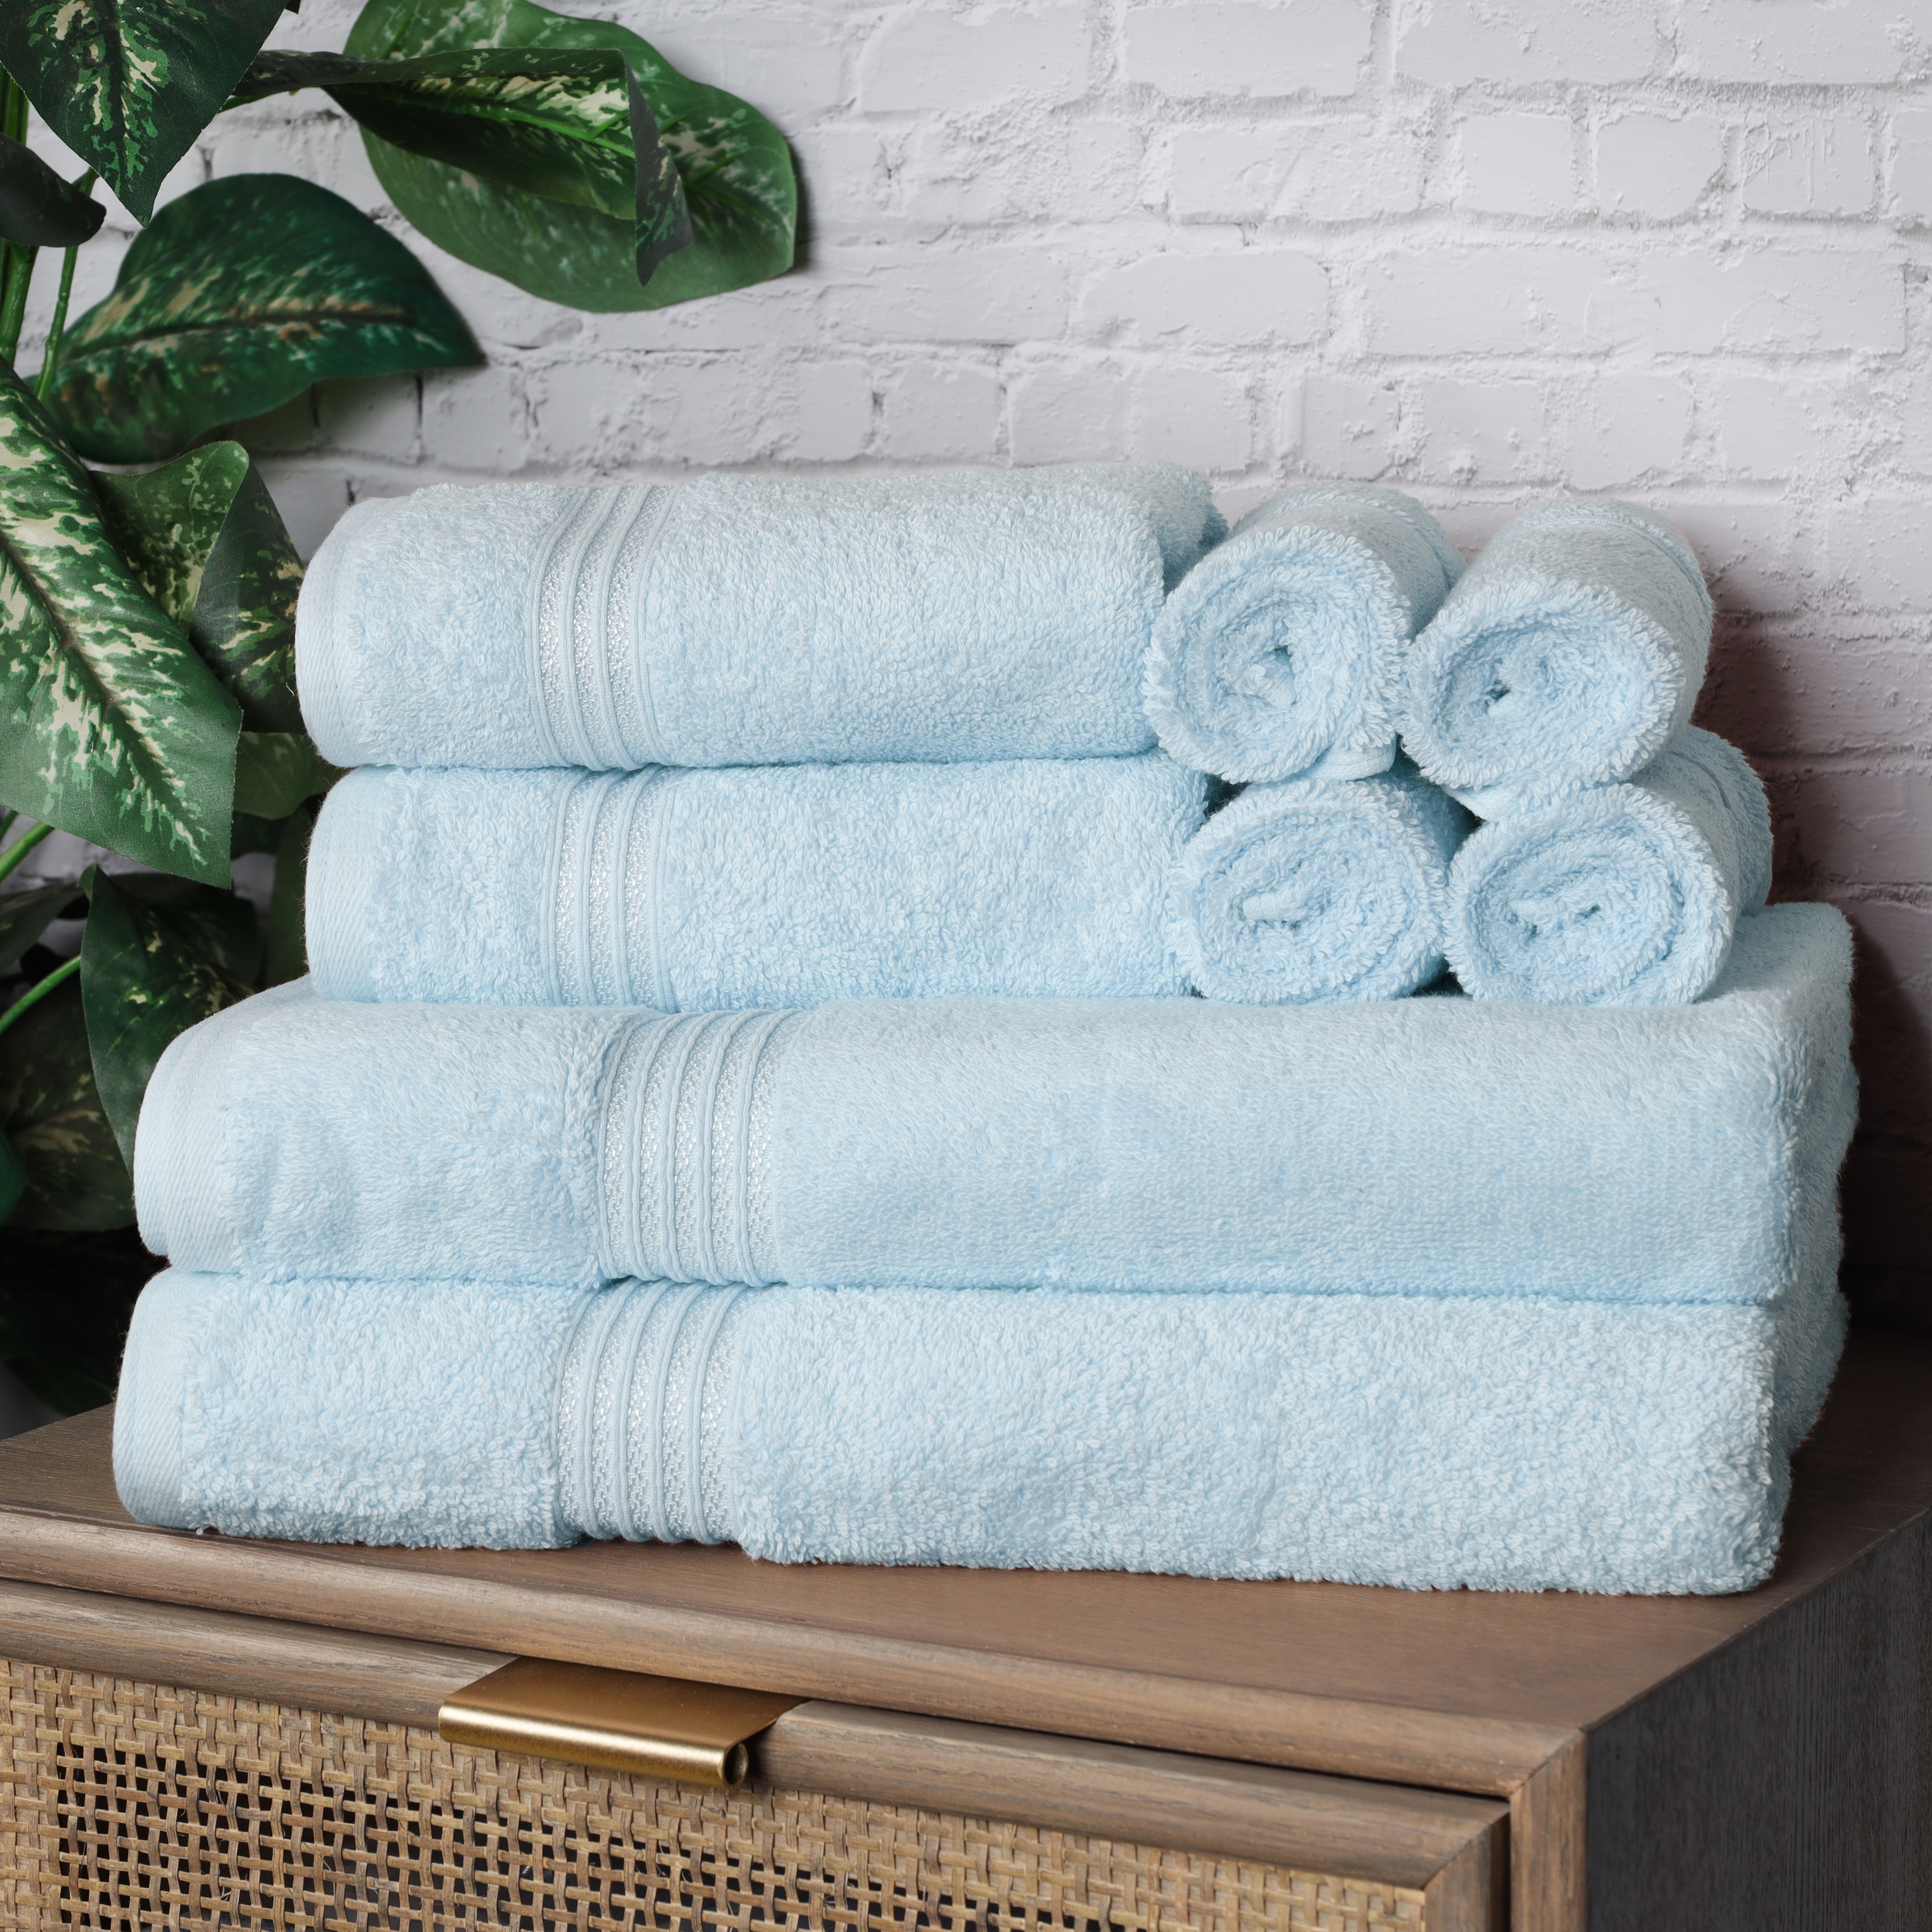 Superior Cotton 2-Piece Absorbent Bath Mat Set ,Canary